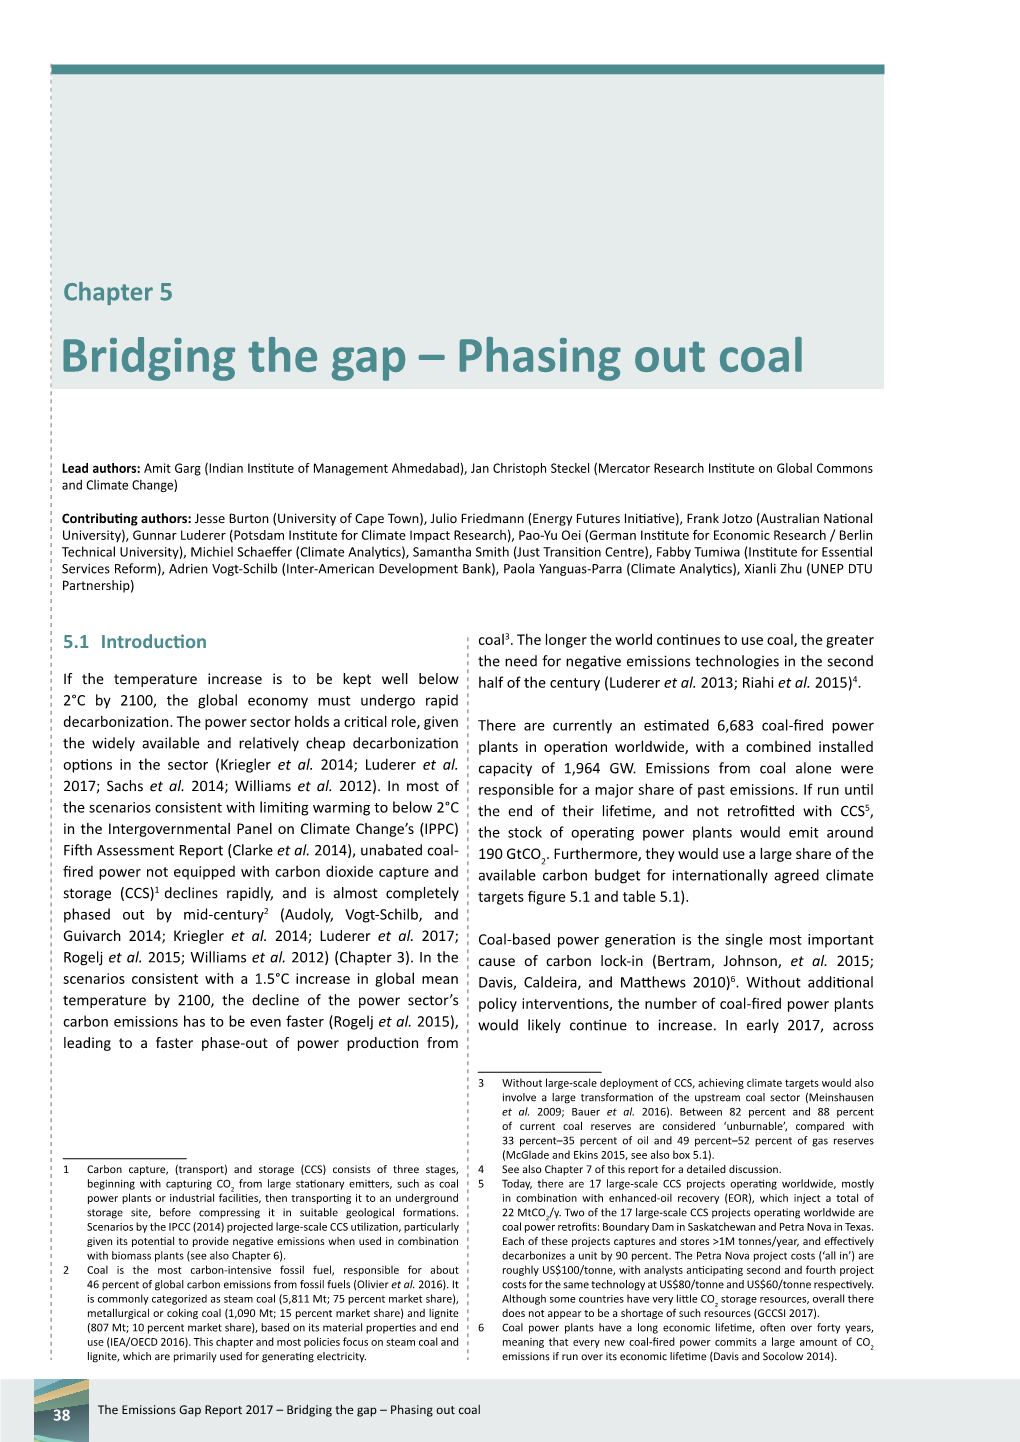 Bridging the Gap – Phasing out Coal